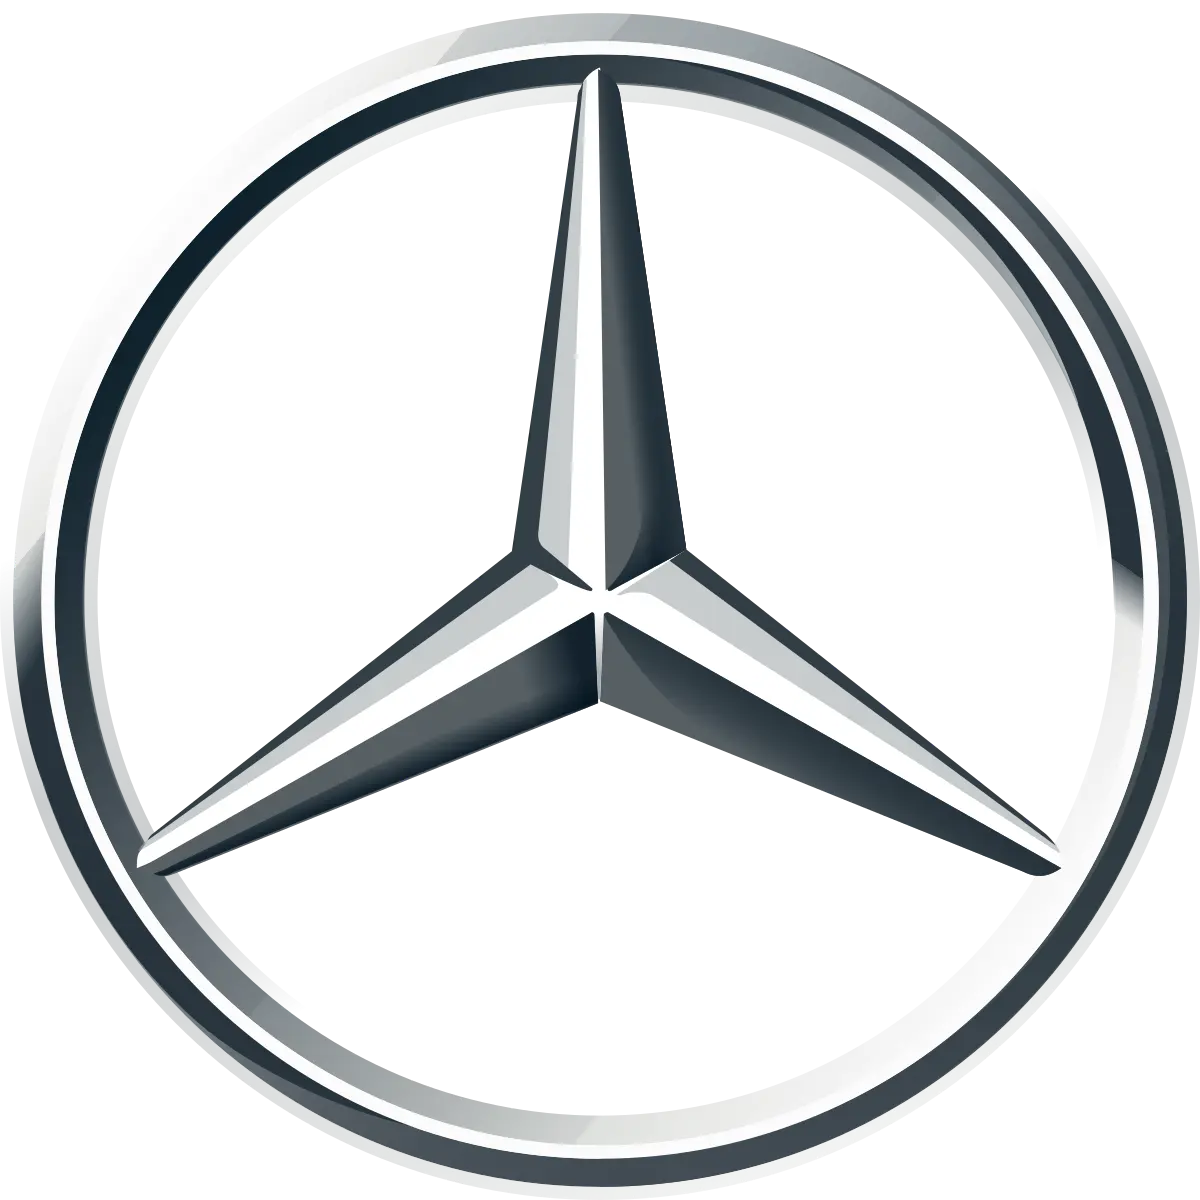 inteligencia artificial mercedes benz - Qué hace la marca Mercedes-Benz